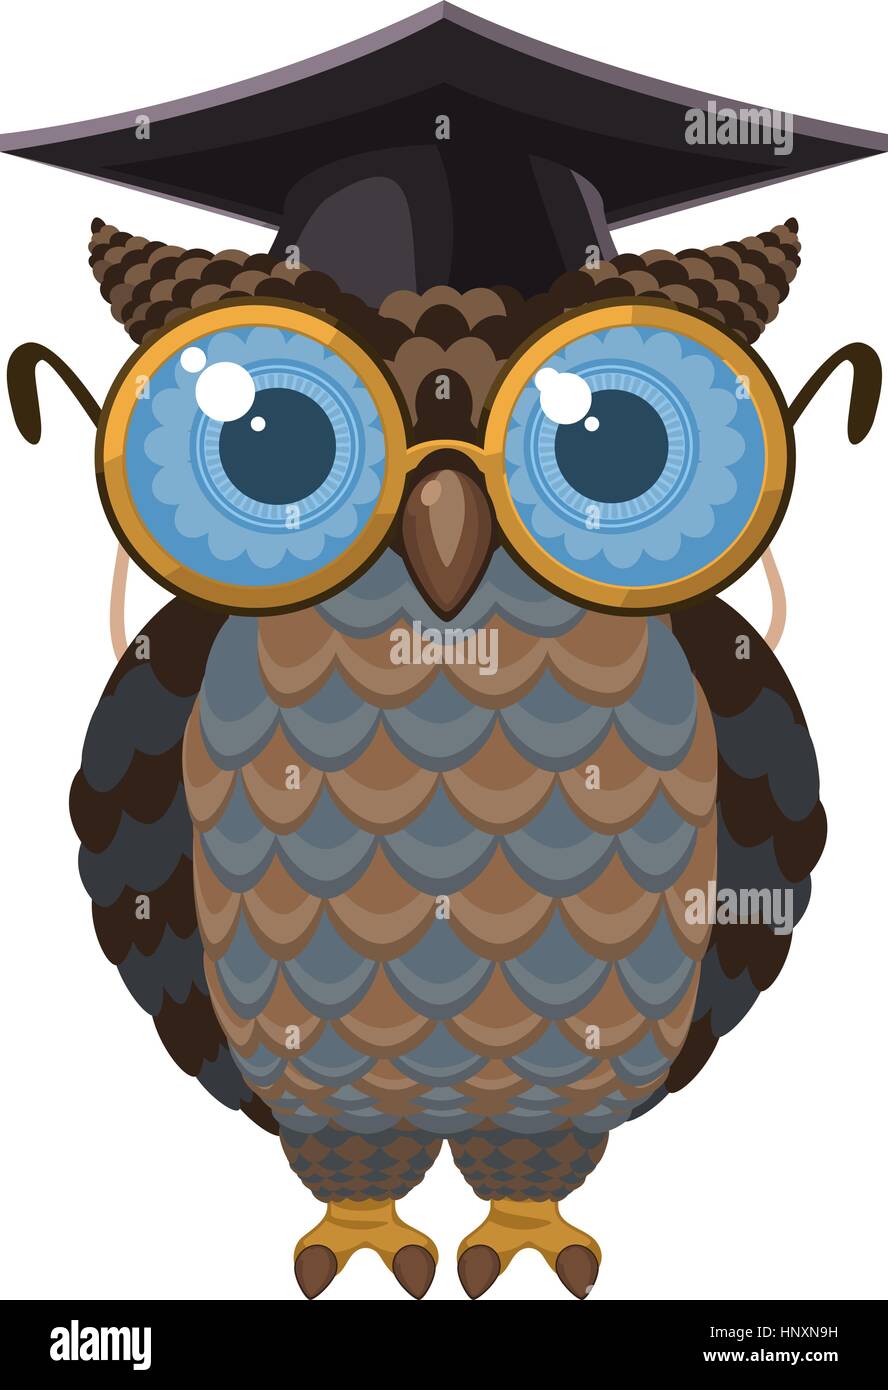 Wise Intelligent Owl vector illustration. Stock Vector